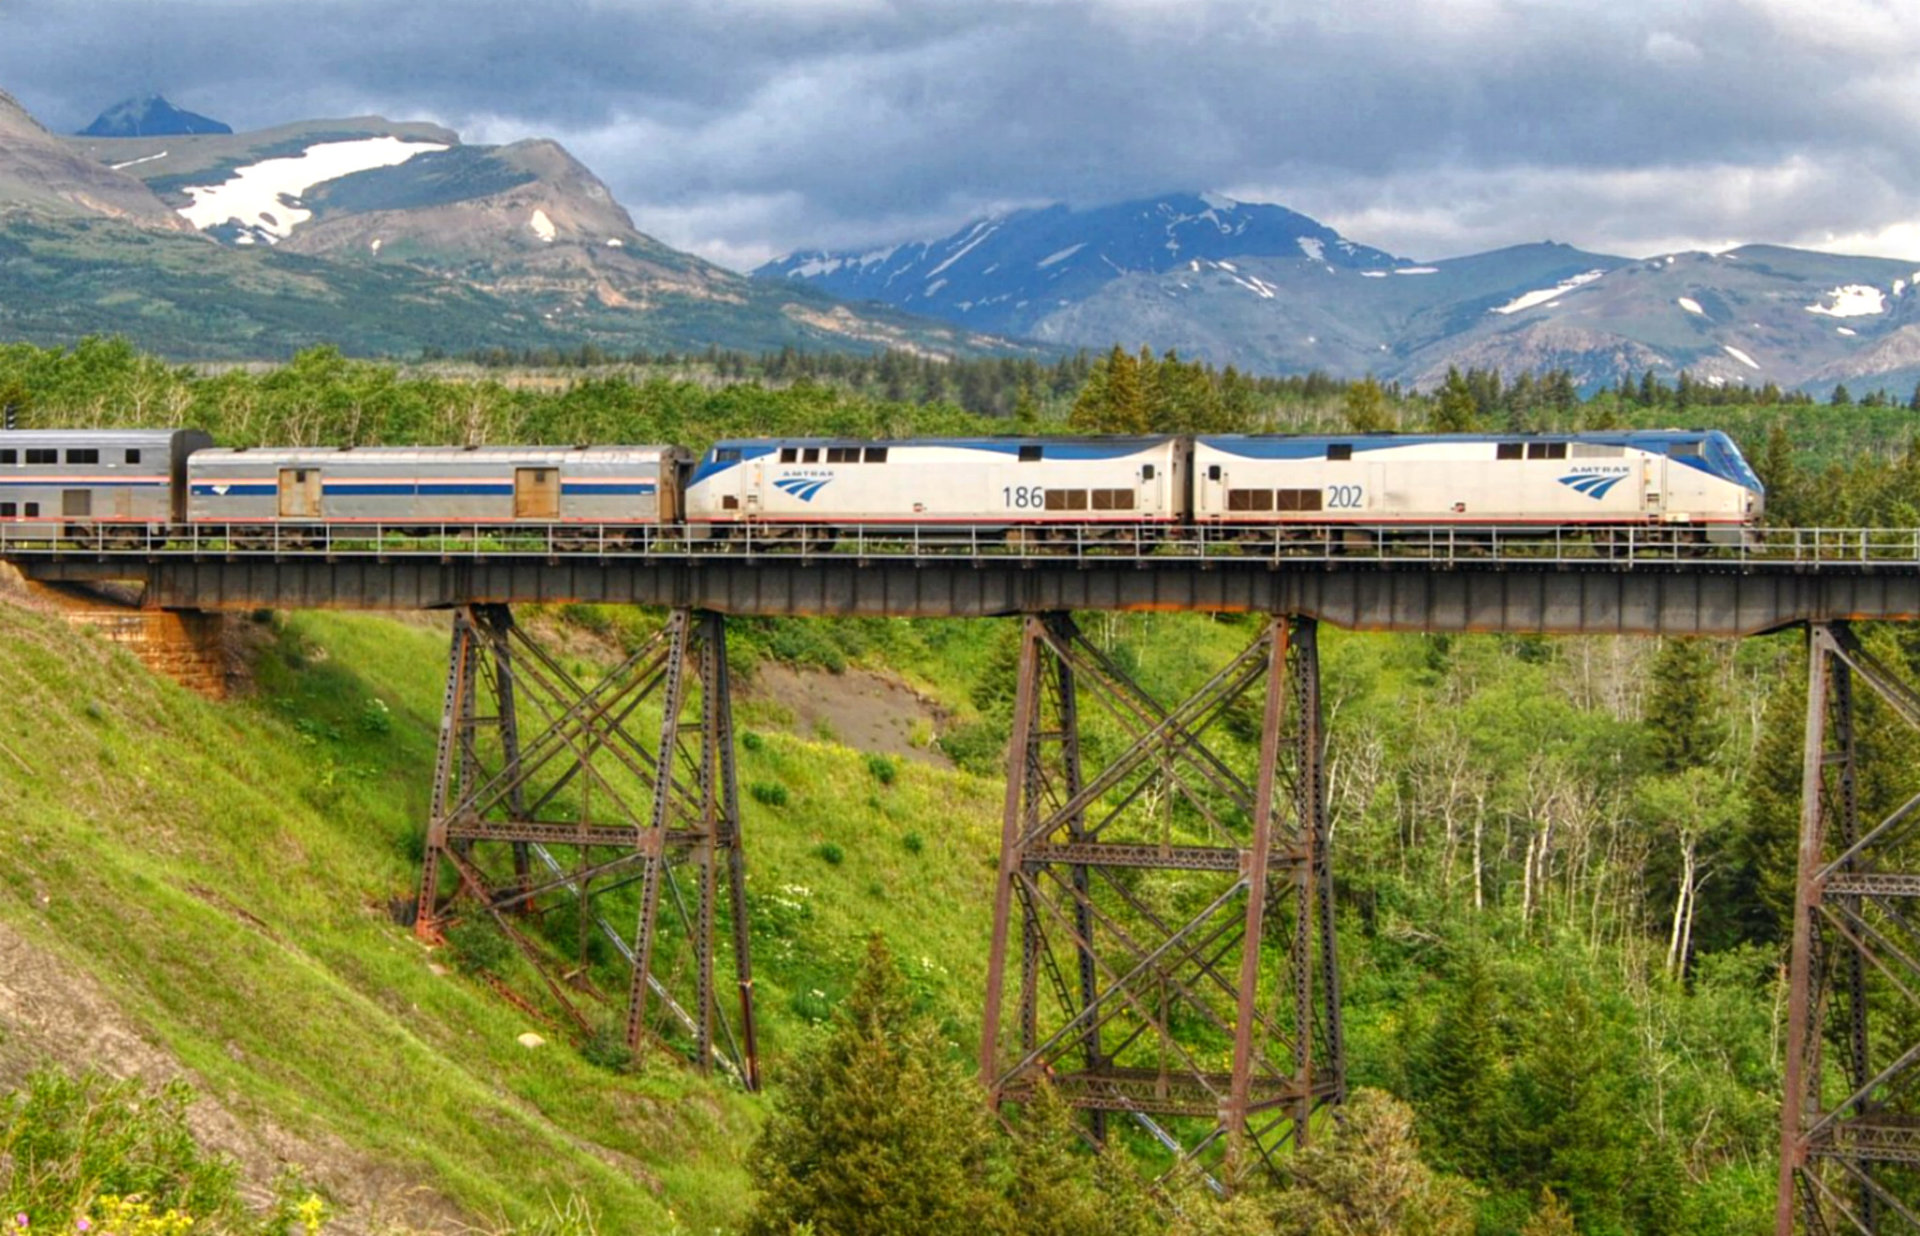 Train to Glacier National Park